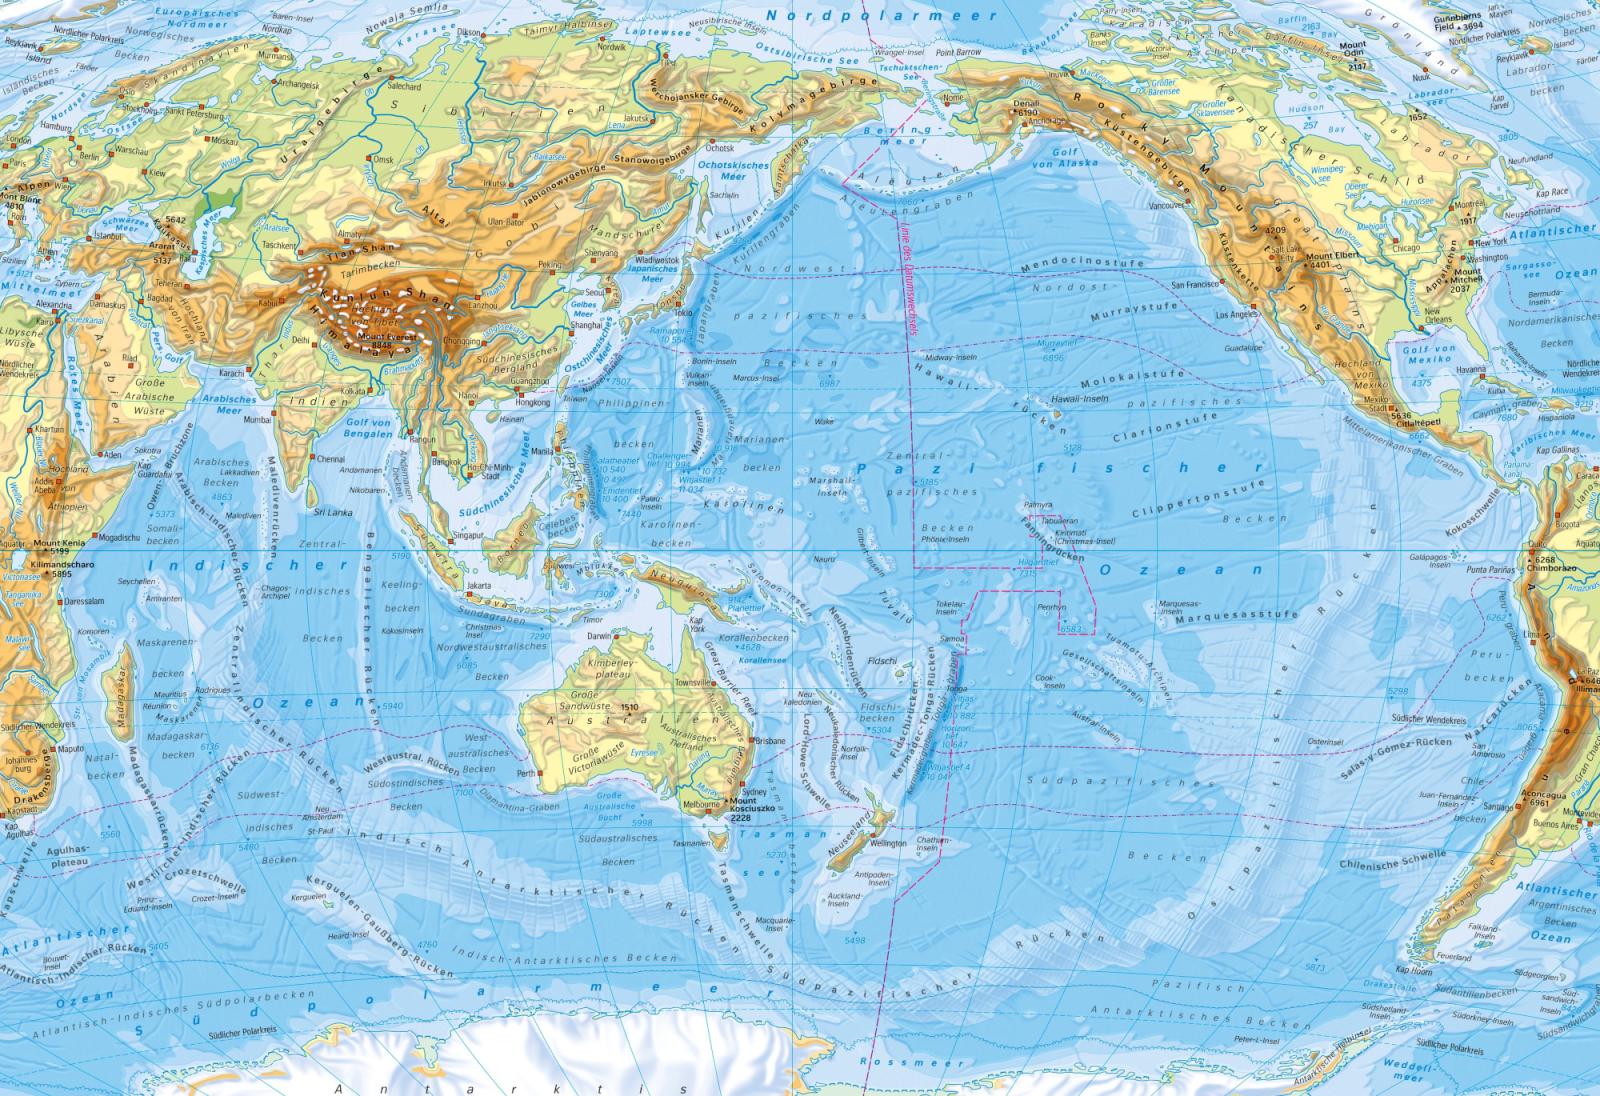 Юго восточный тихий океан. Тихий океан на карте. Острова Тихого океана на карте. Т̊и̊х̊и̊й̊ о̊к̊е̊а̊н̊ н̊а̊ к̊а̊р̊р̊ т̊т̊е̊. Карта Тихого океана географическая.